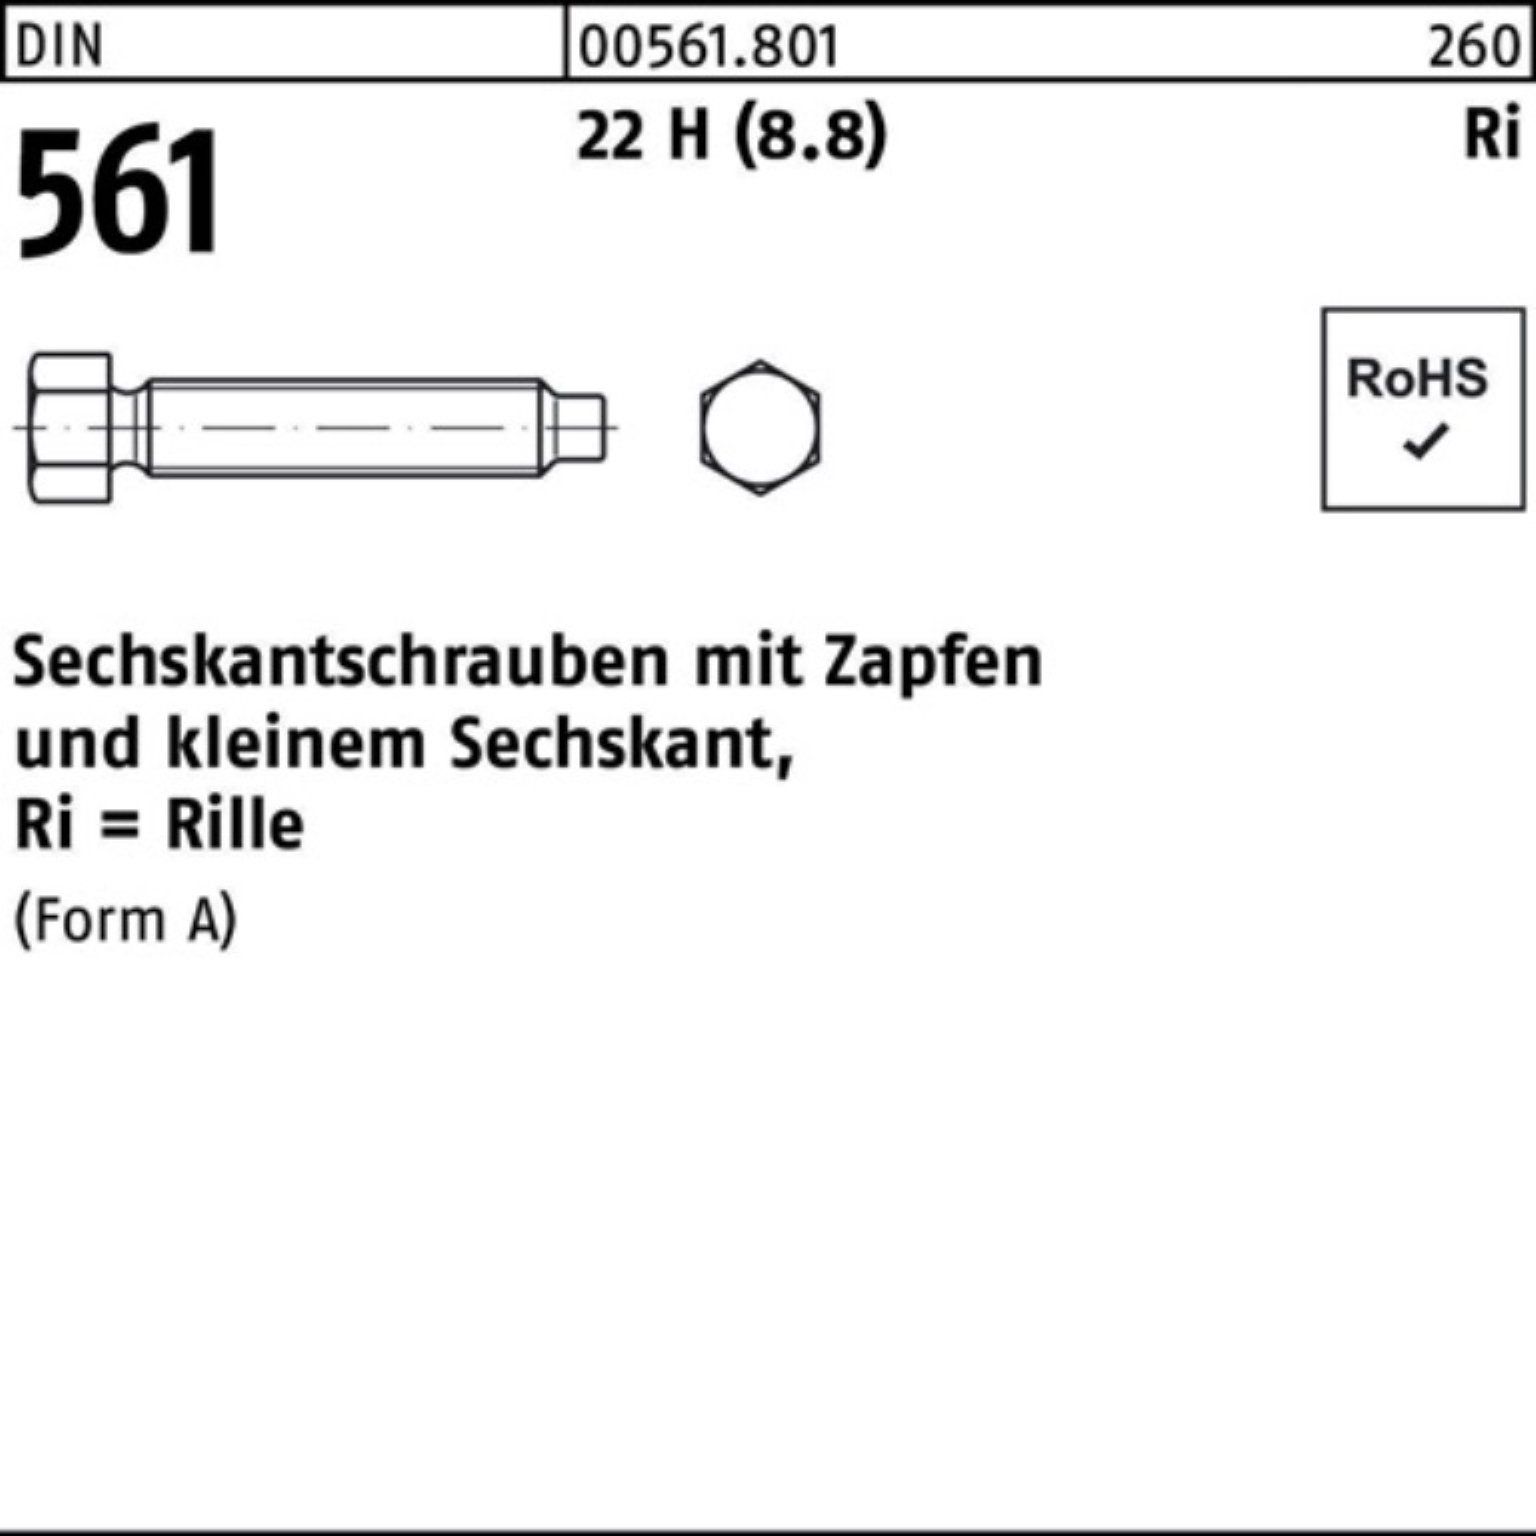 Reyher Sechskantschraube 100er Pack Sechskantschraube DIN 561 Zapfen AM 12x 60 22 H (8.8) 25 St